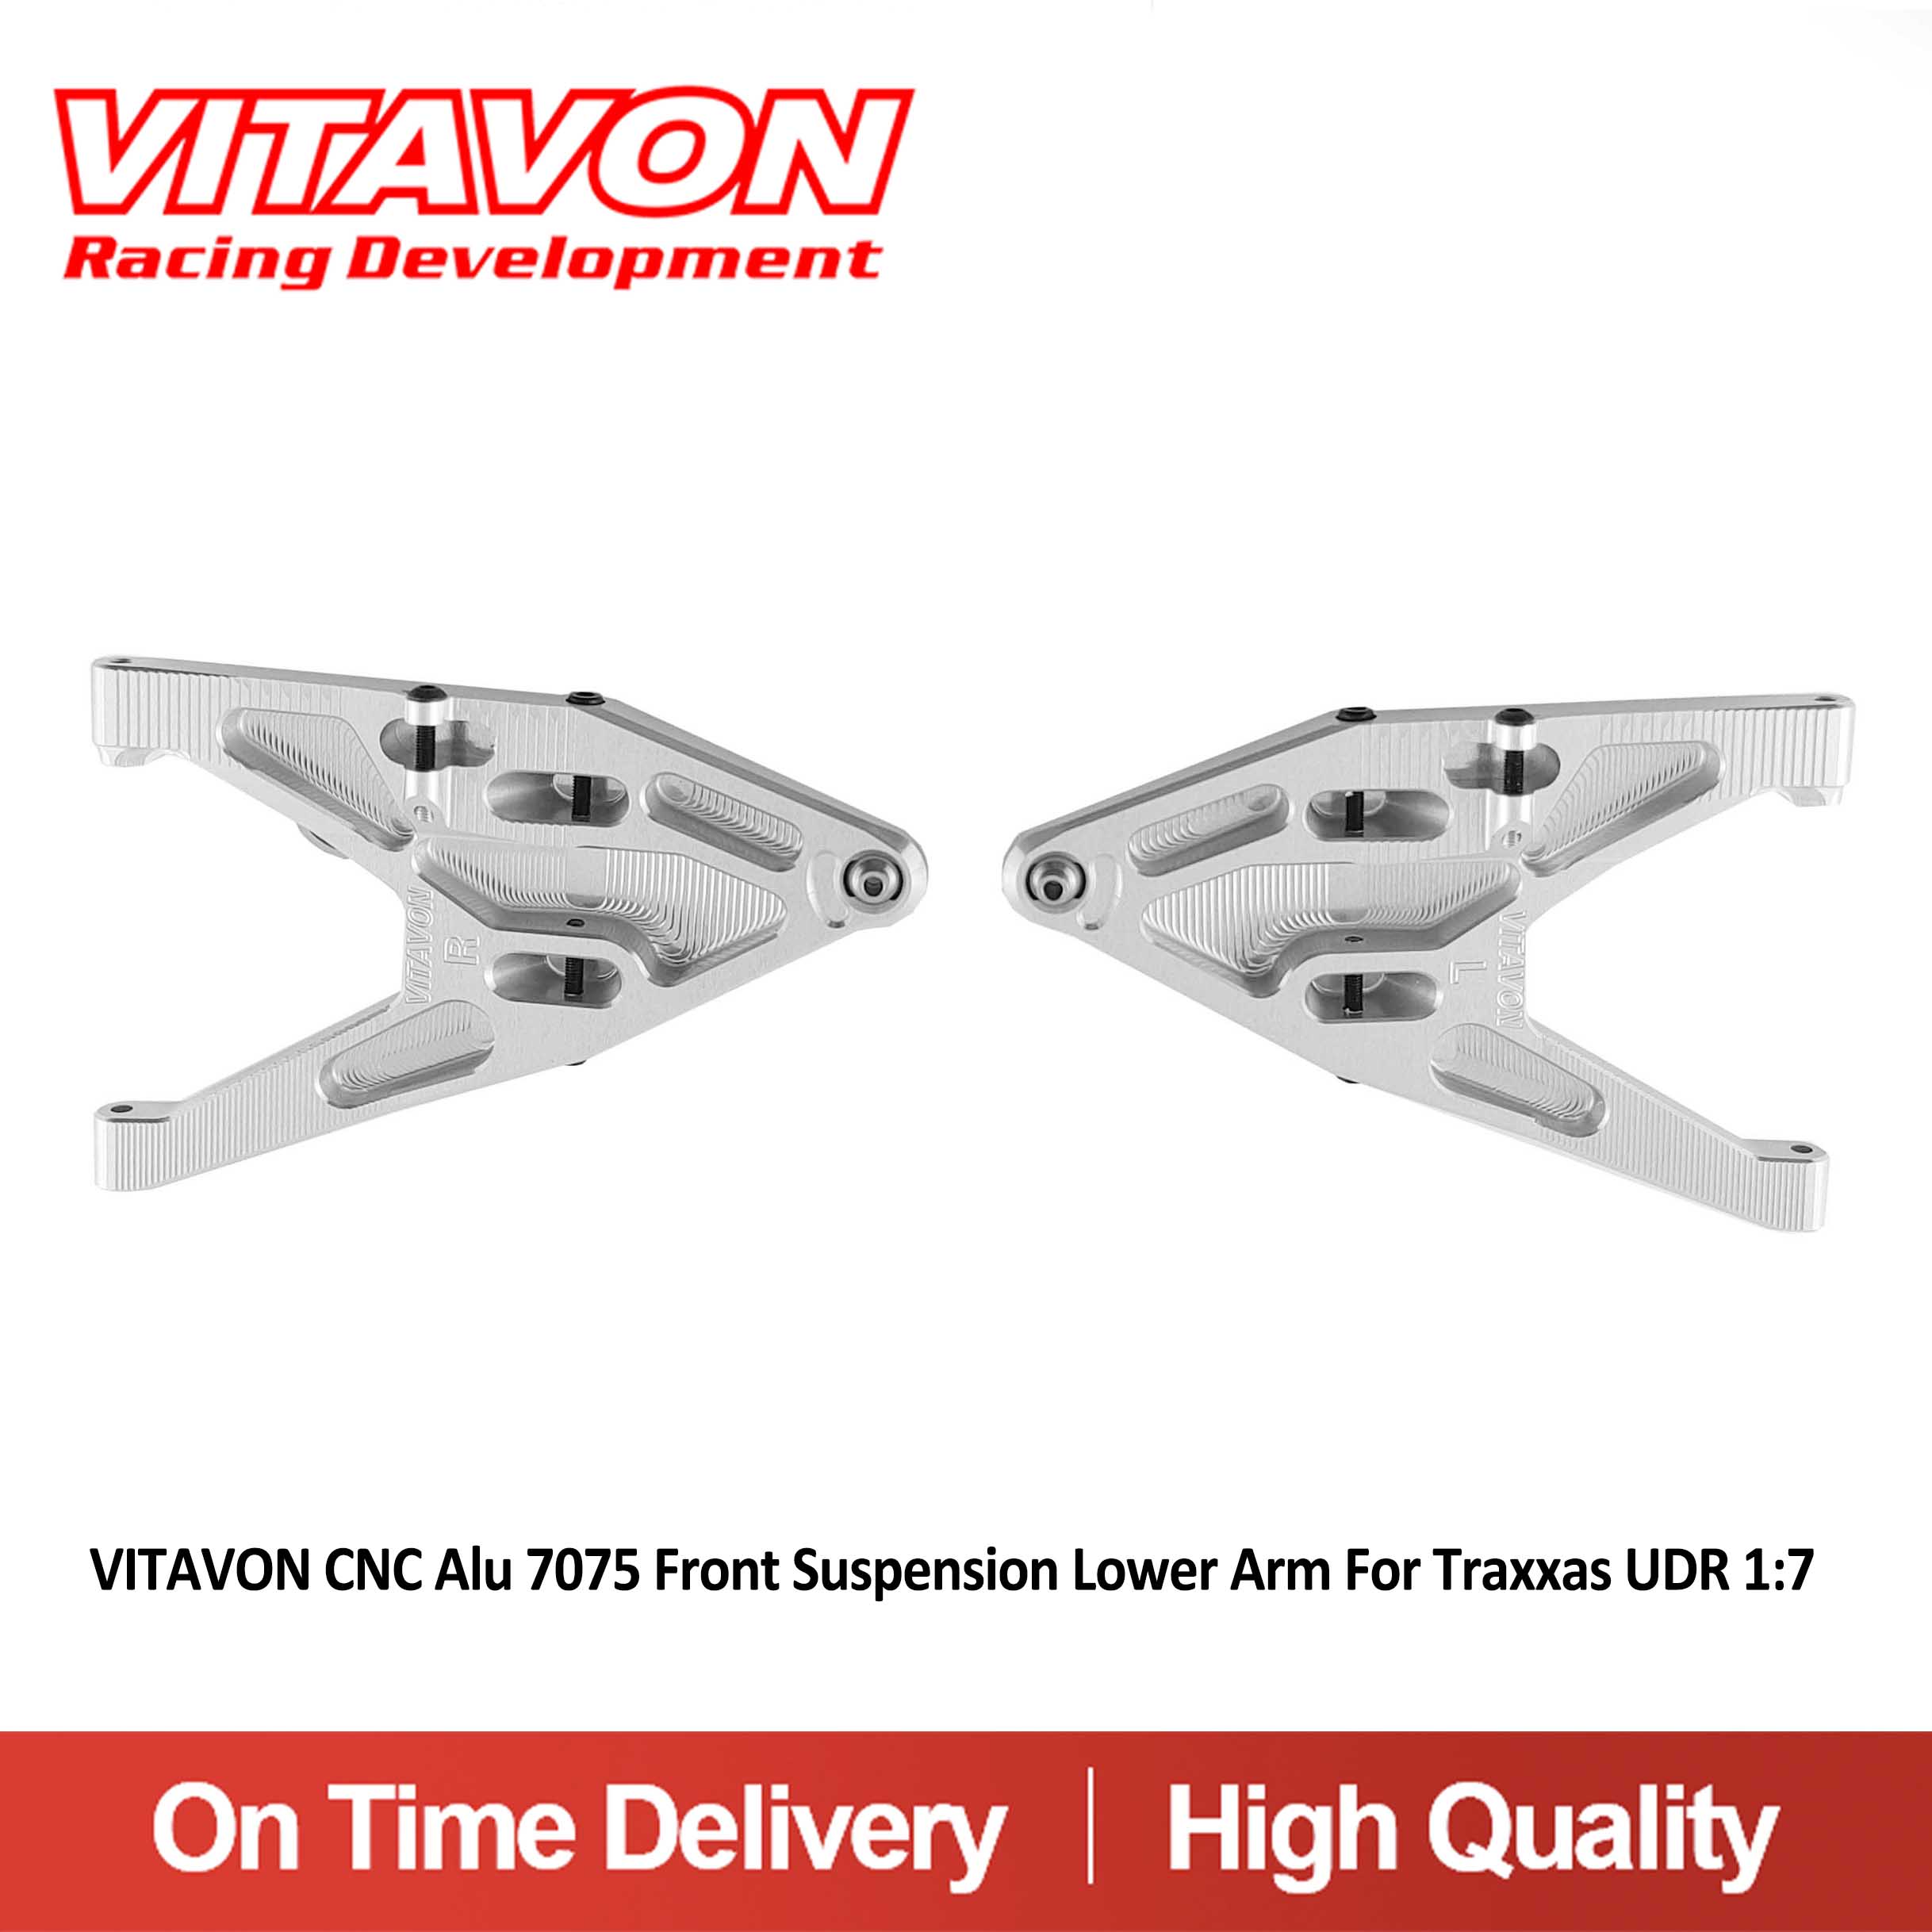 VITAVON CNC Alu 7075 Front Suspension Lower Arm For Traxxas UDR 1:7